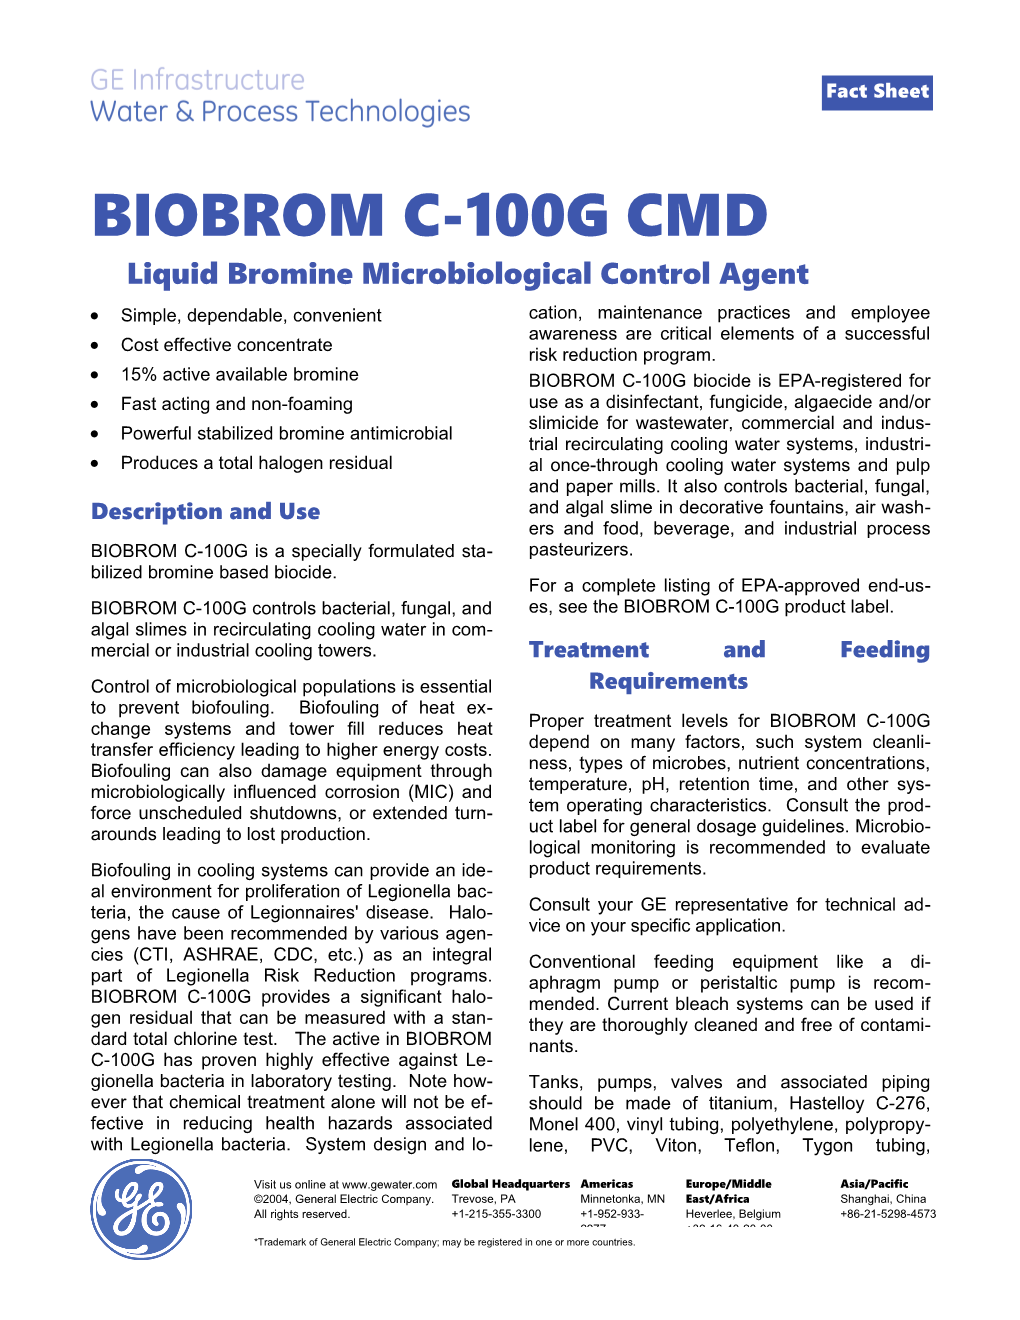 BIOBROM C-100G Cmdliquid Bromine Microbiological Control Agent